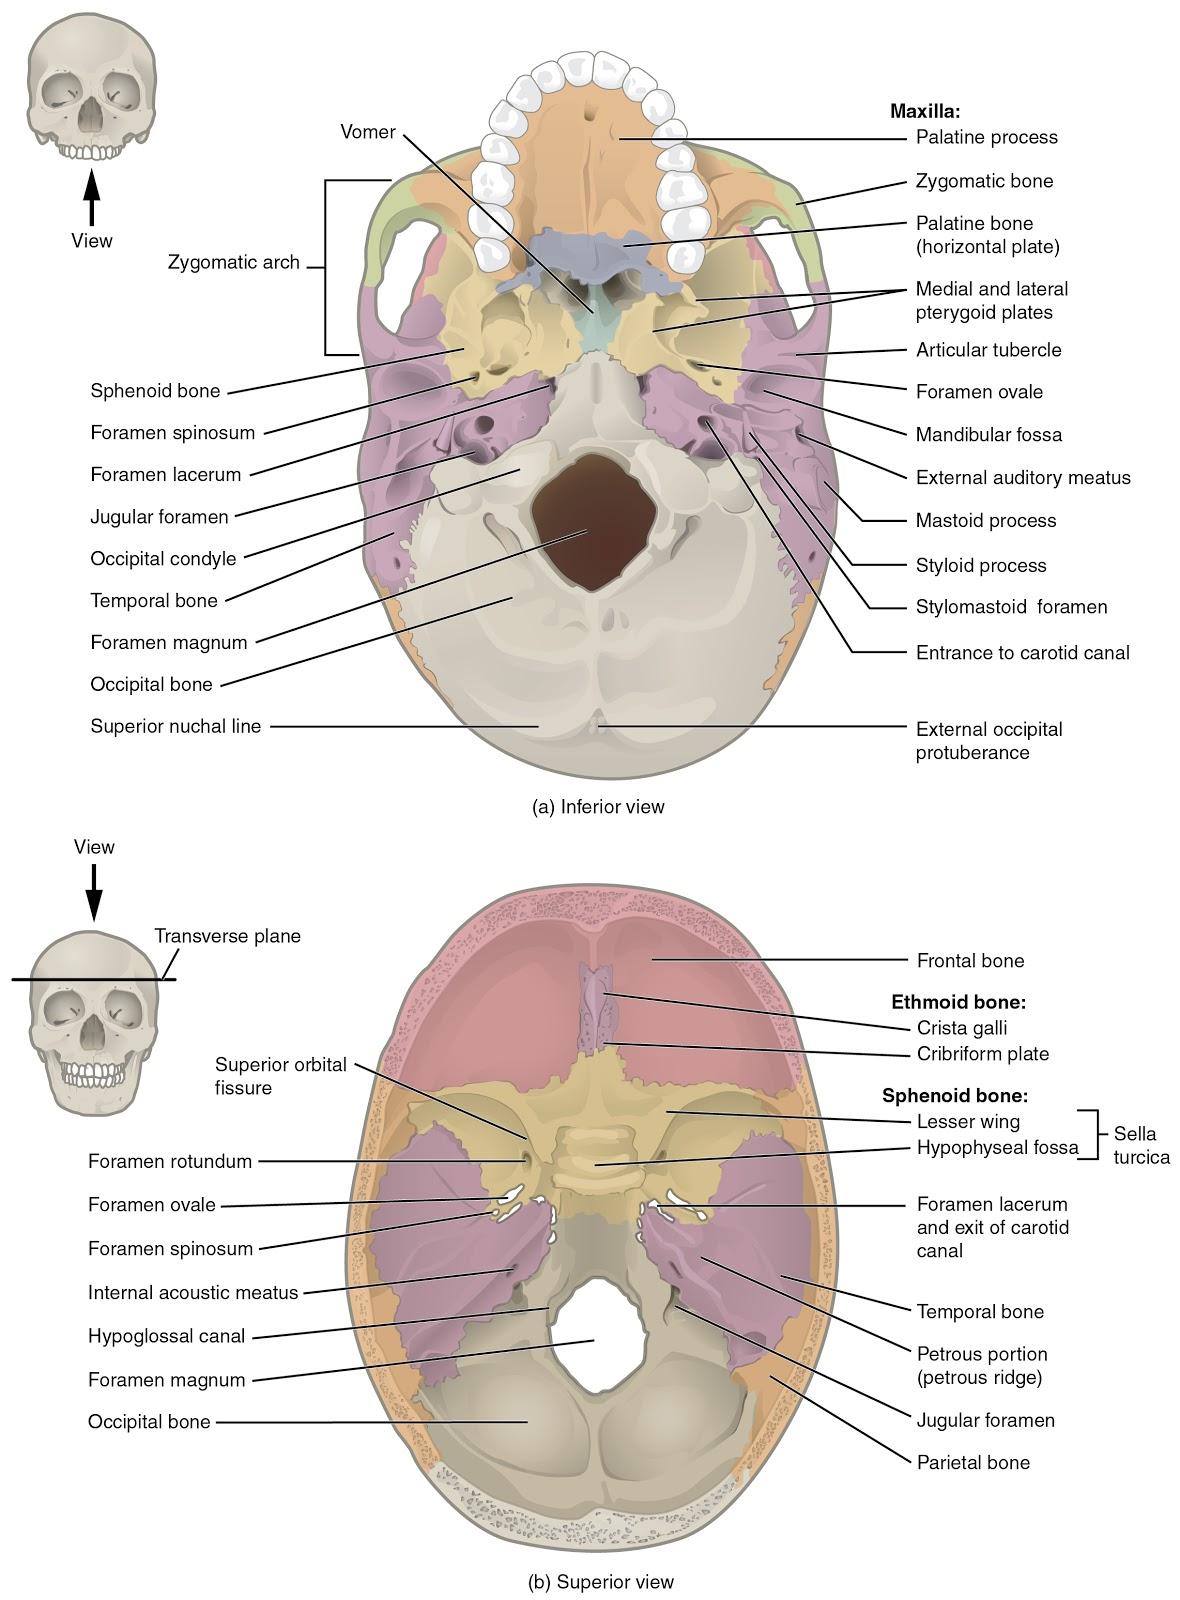 Base and internal cranium views colored to represent bones.